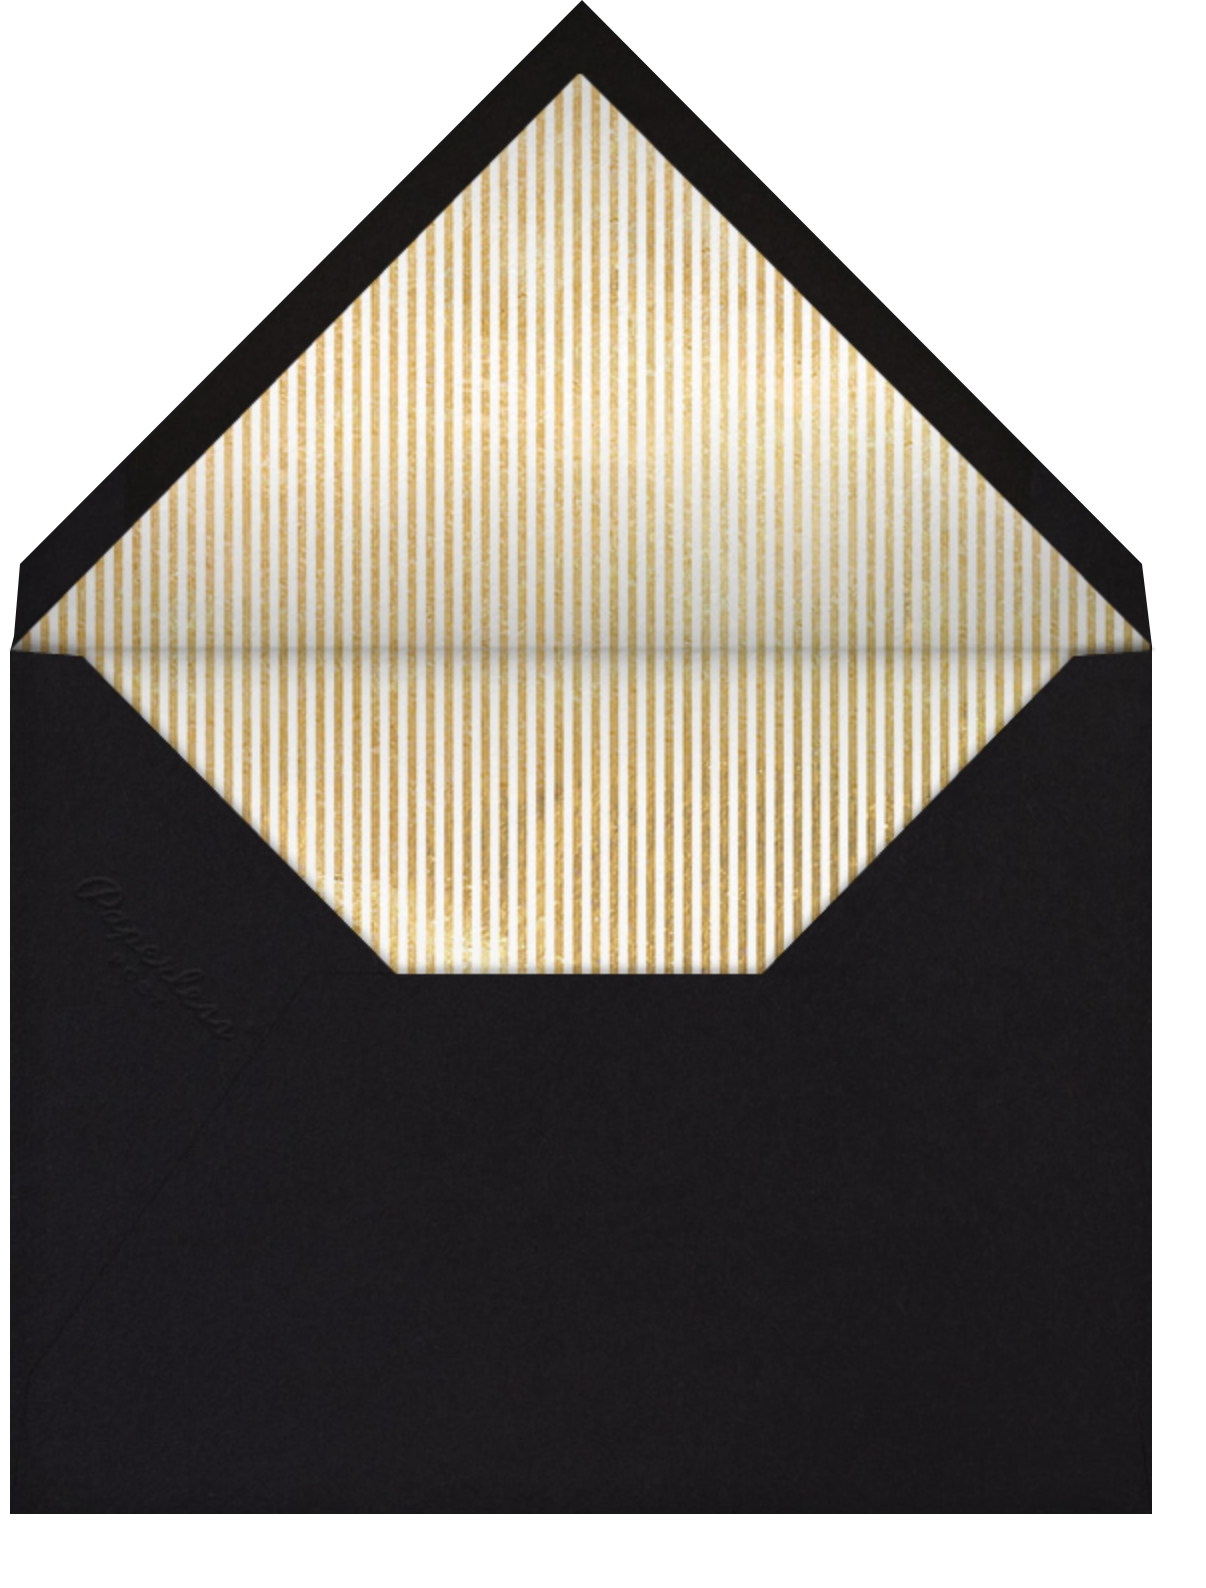 Suki - New Date - Paperless Post - Envelope